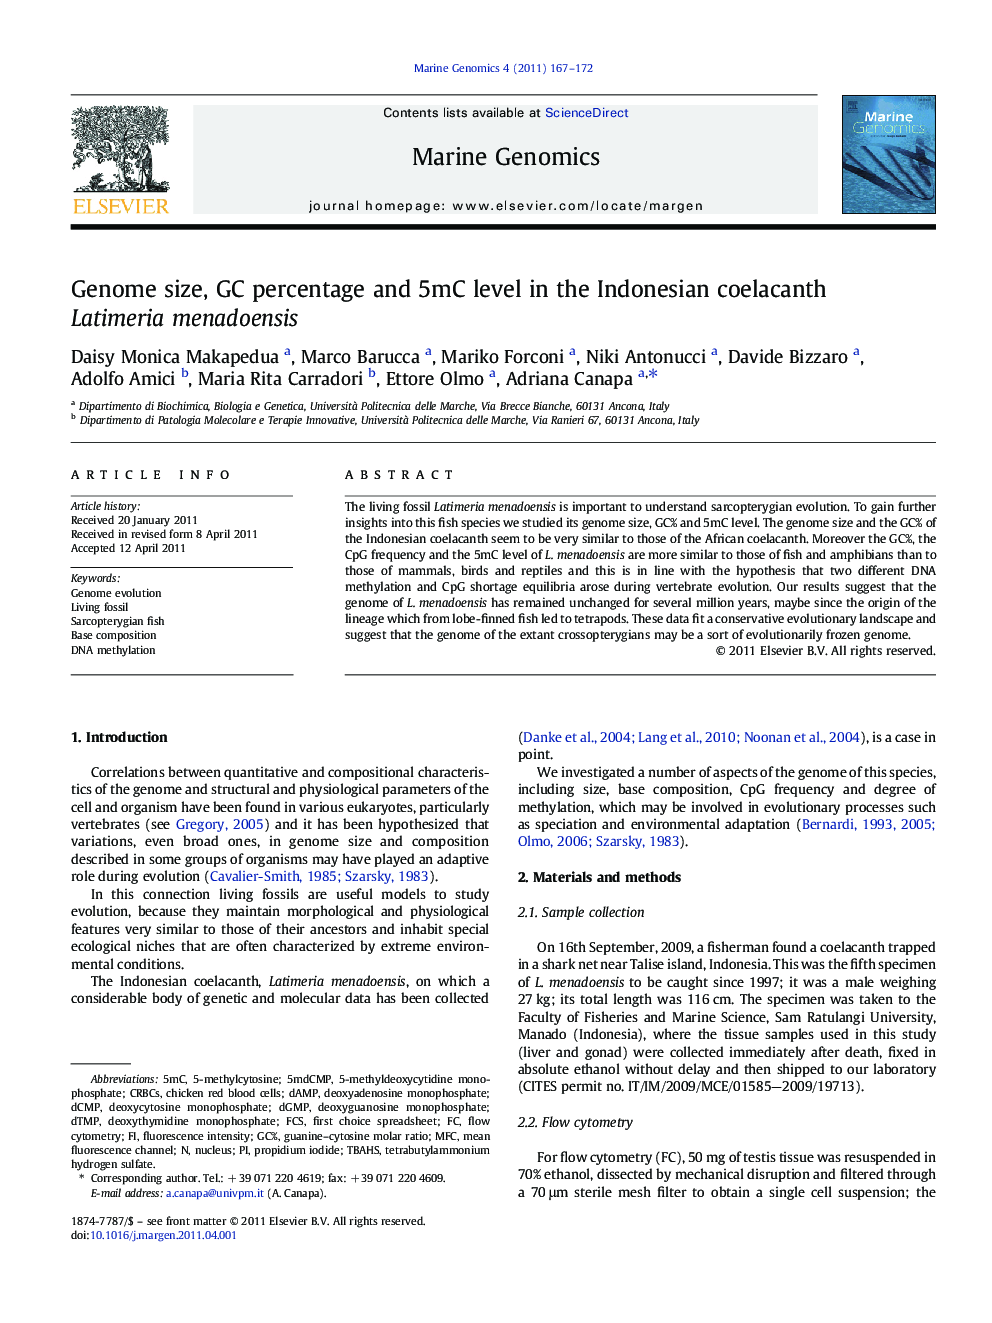 Genome size, GC percentage and 5mC level in the Indonesian coelacanth Latimeria menadoensis